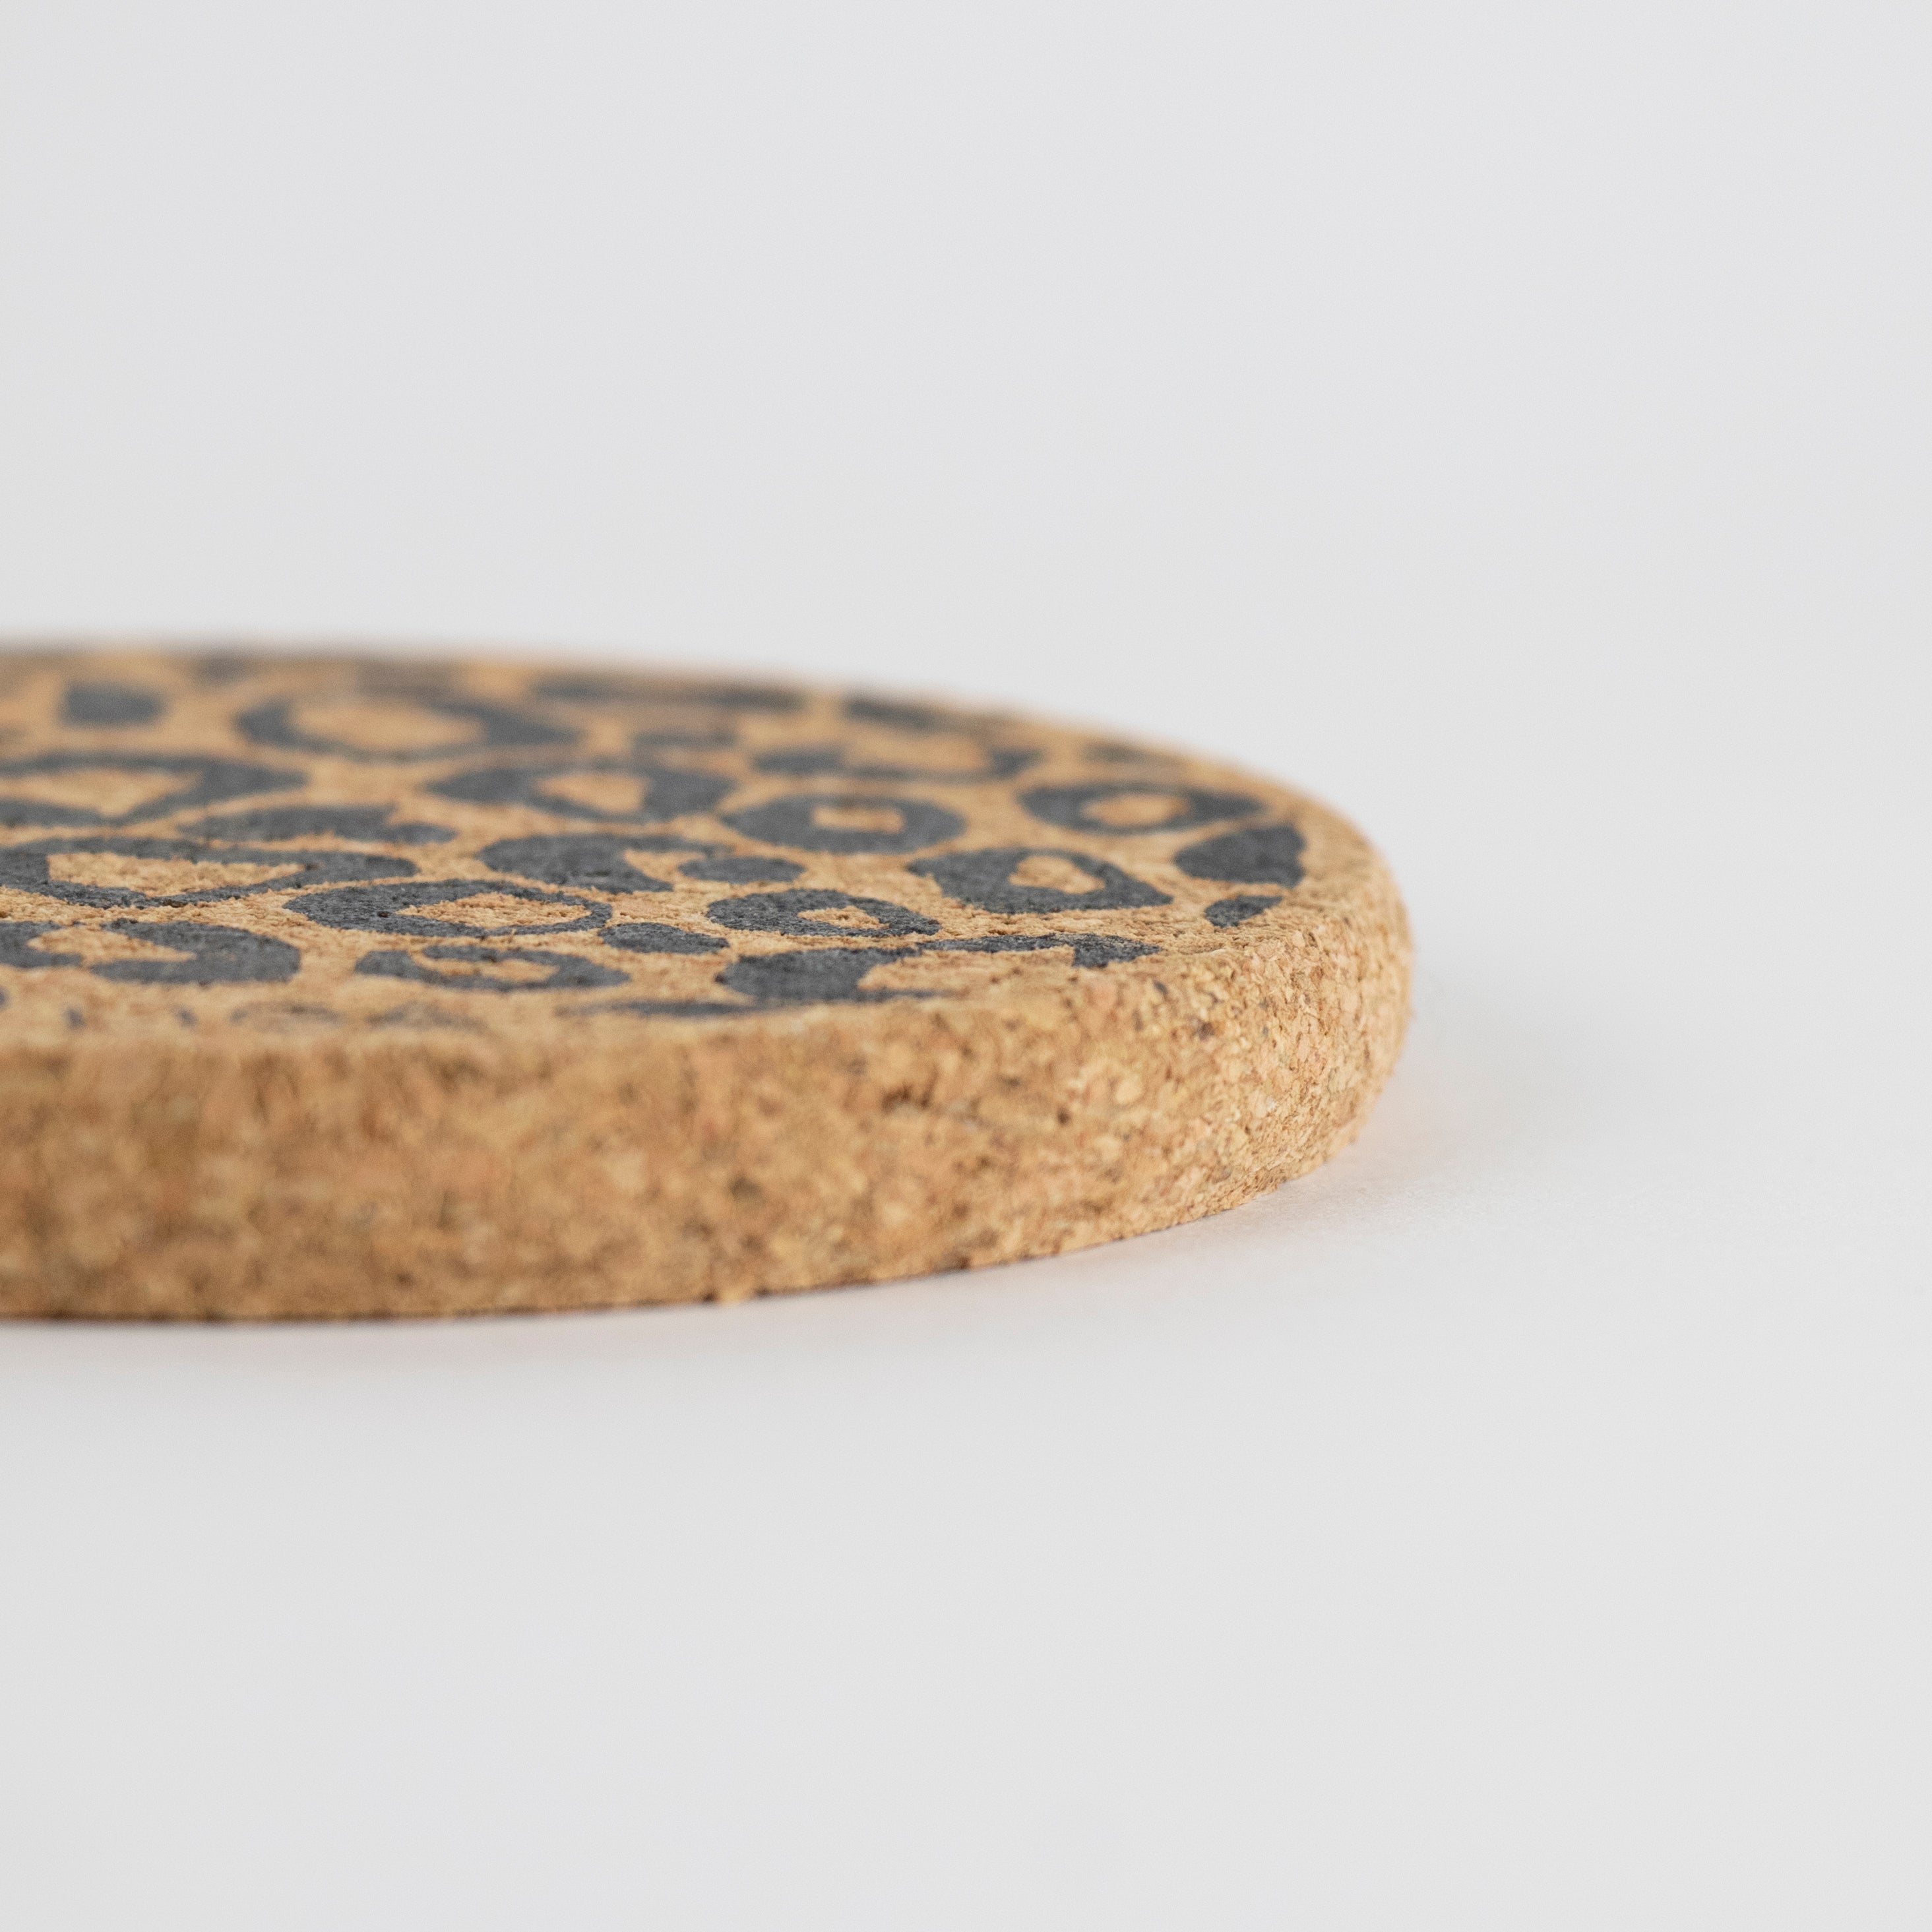 Cork Coasters | Leopard Print